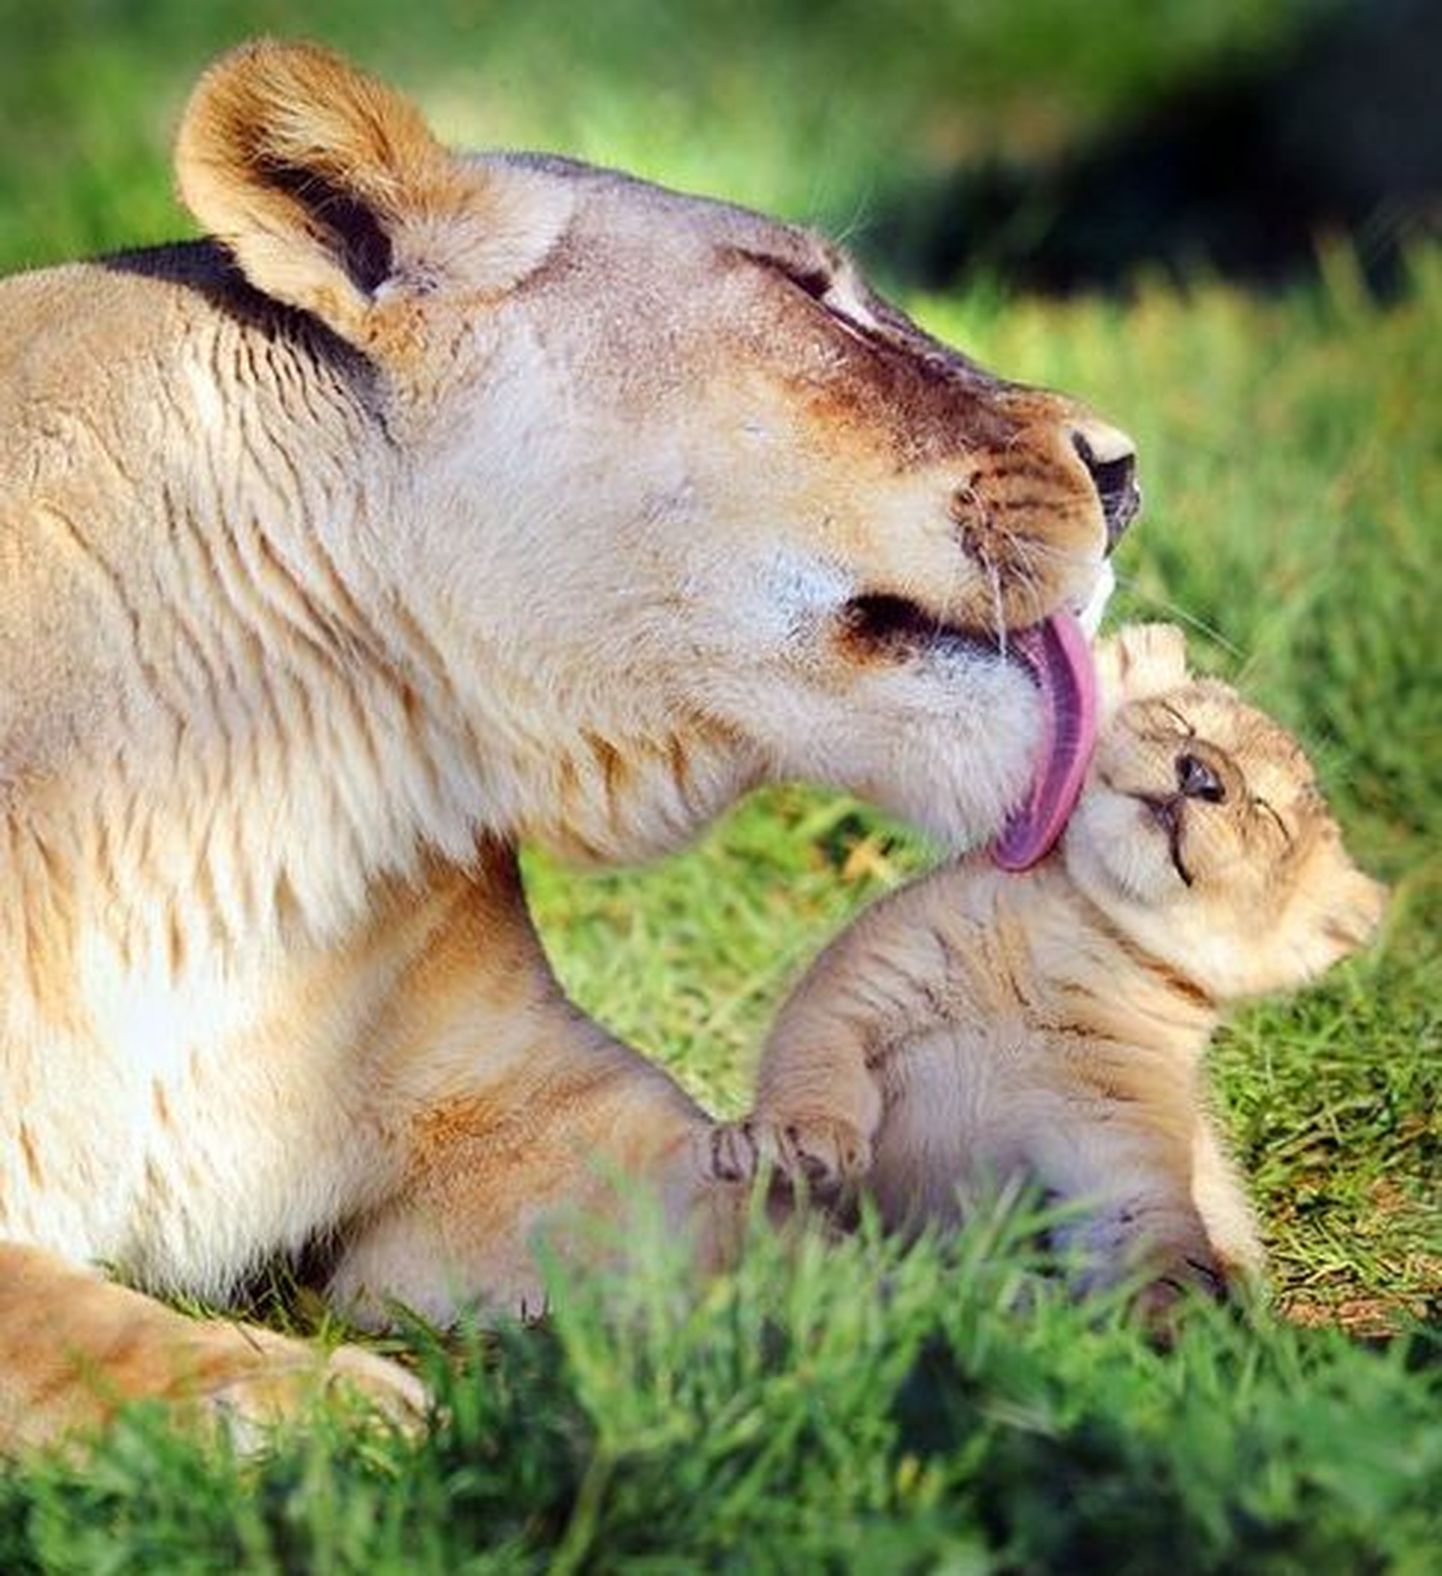 Adelaide´i Monarto loomaaia emalõvi poega lakkumas